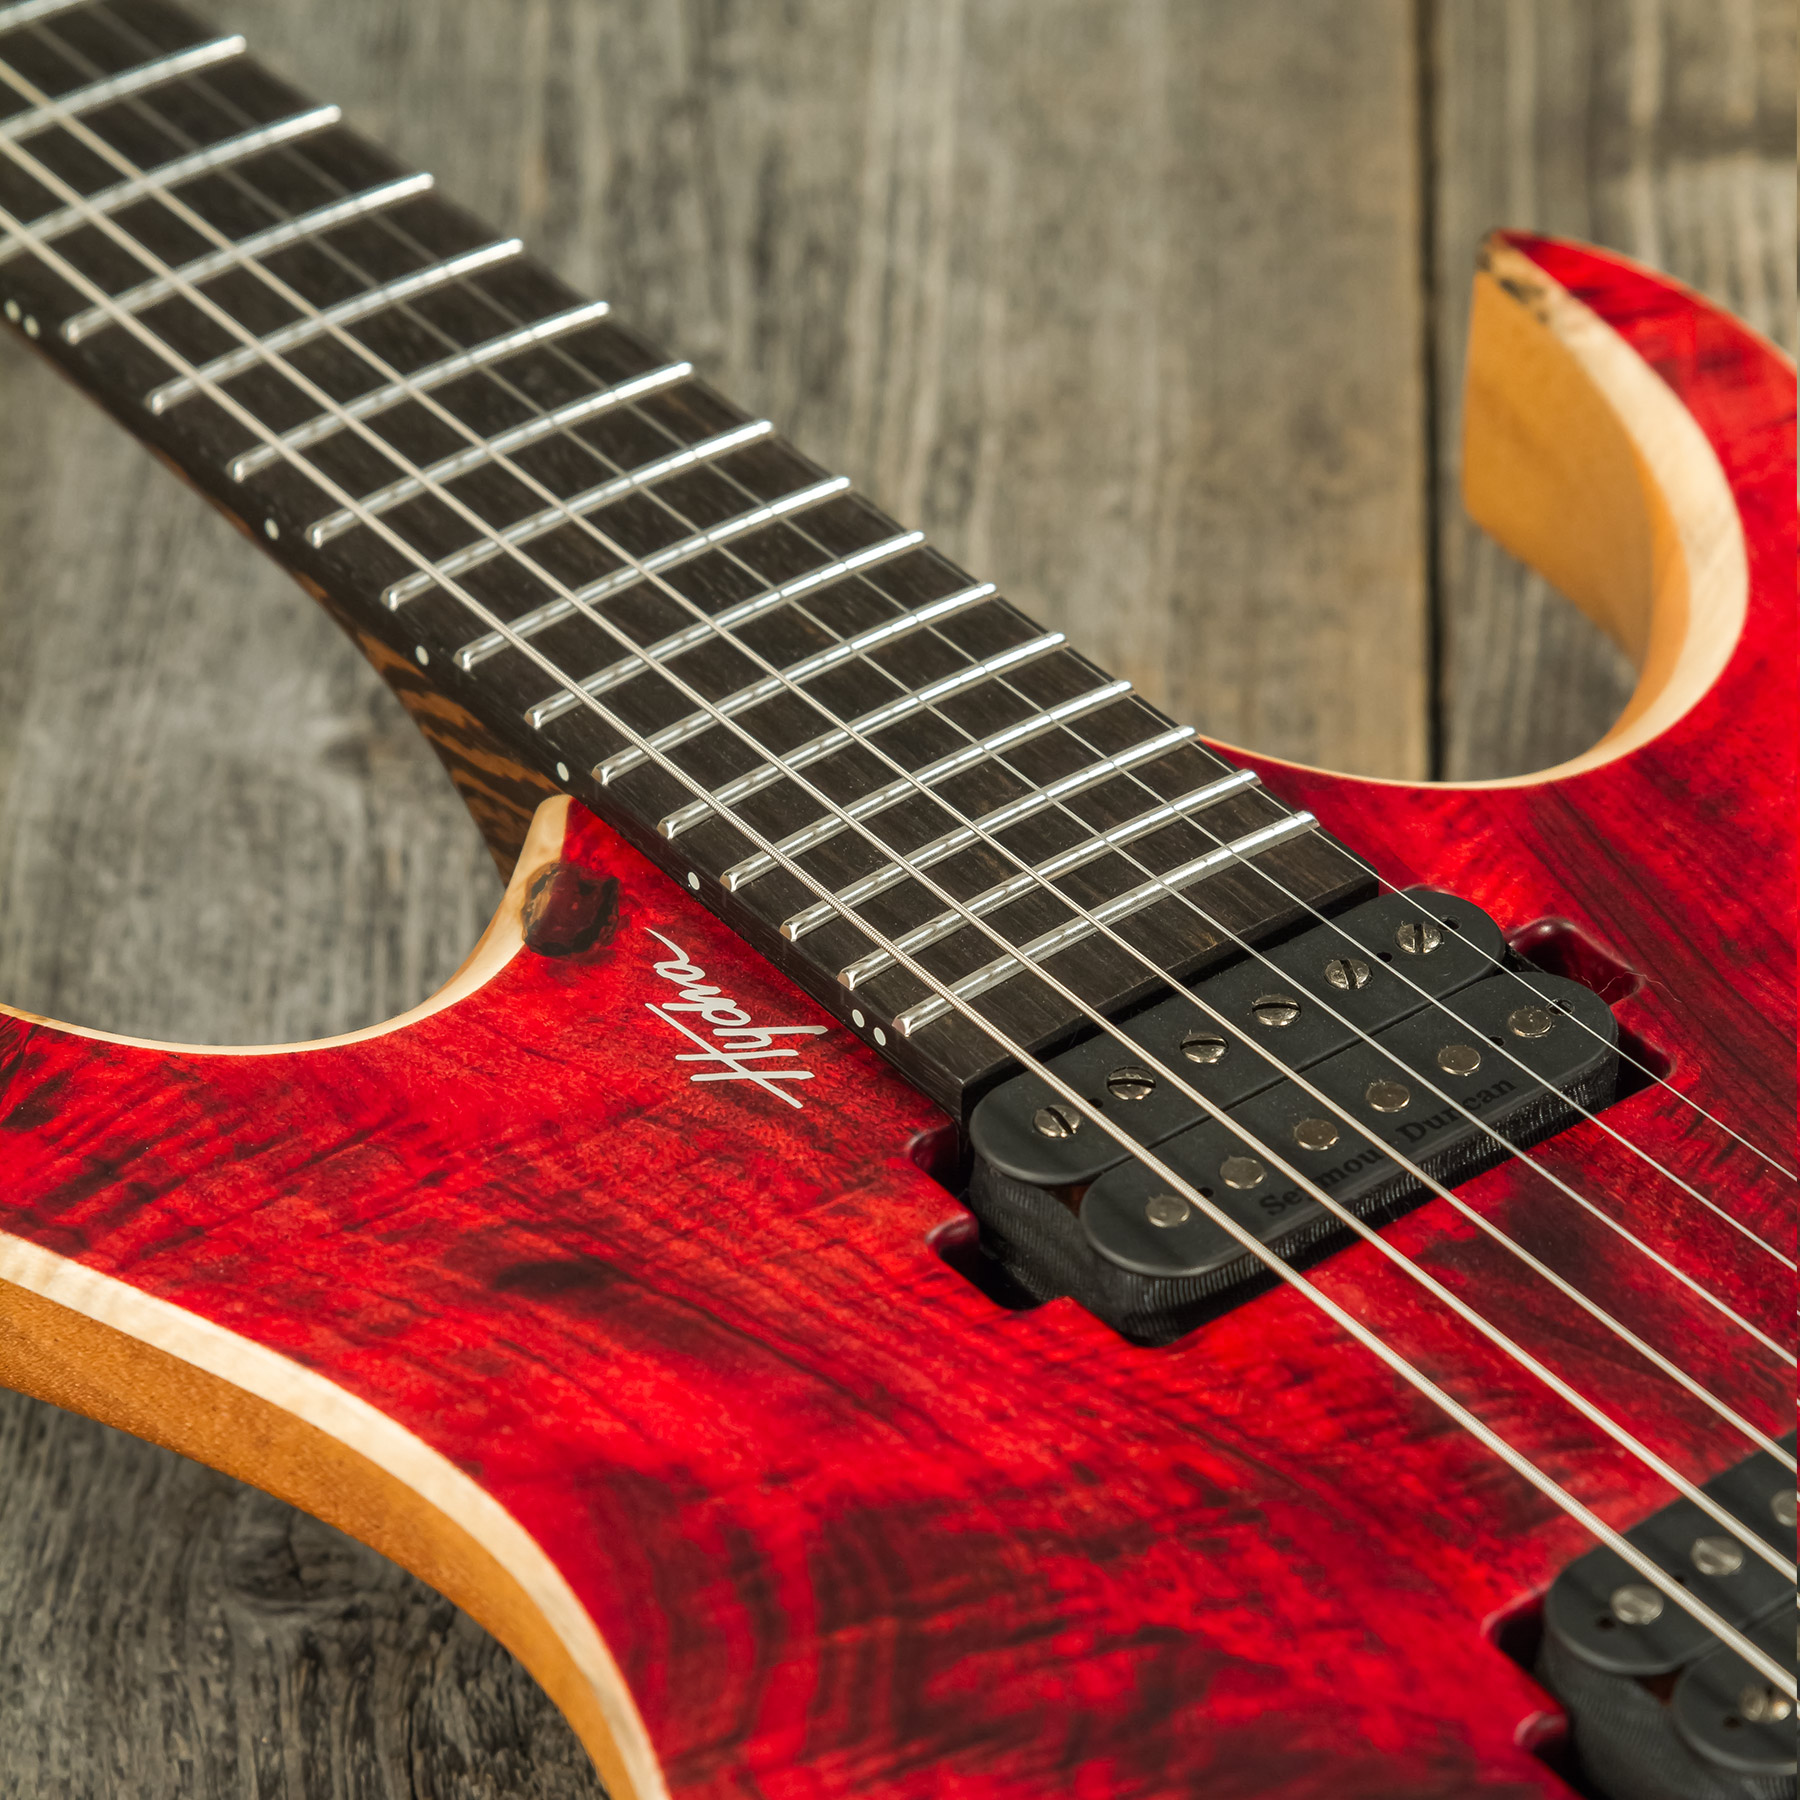 Mayones Guitars Hydra Elite 6 2h Seymour Duncan Ht Eb #hf2008335 - Dirty Red Satin - Guitarra electrica metalica - Variation 4